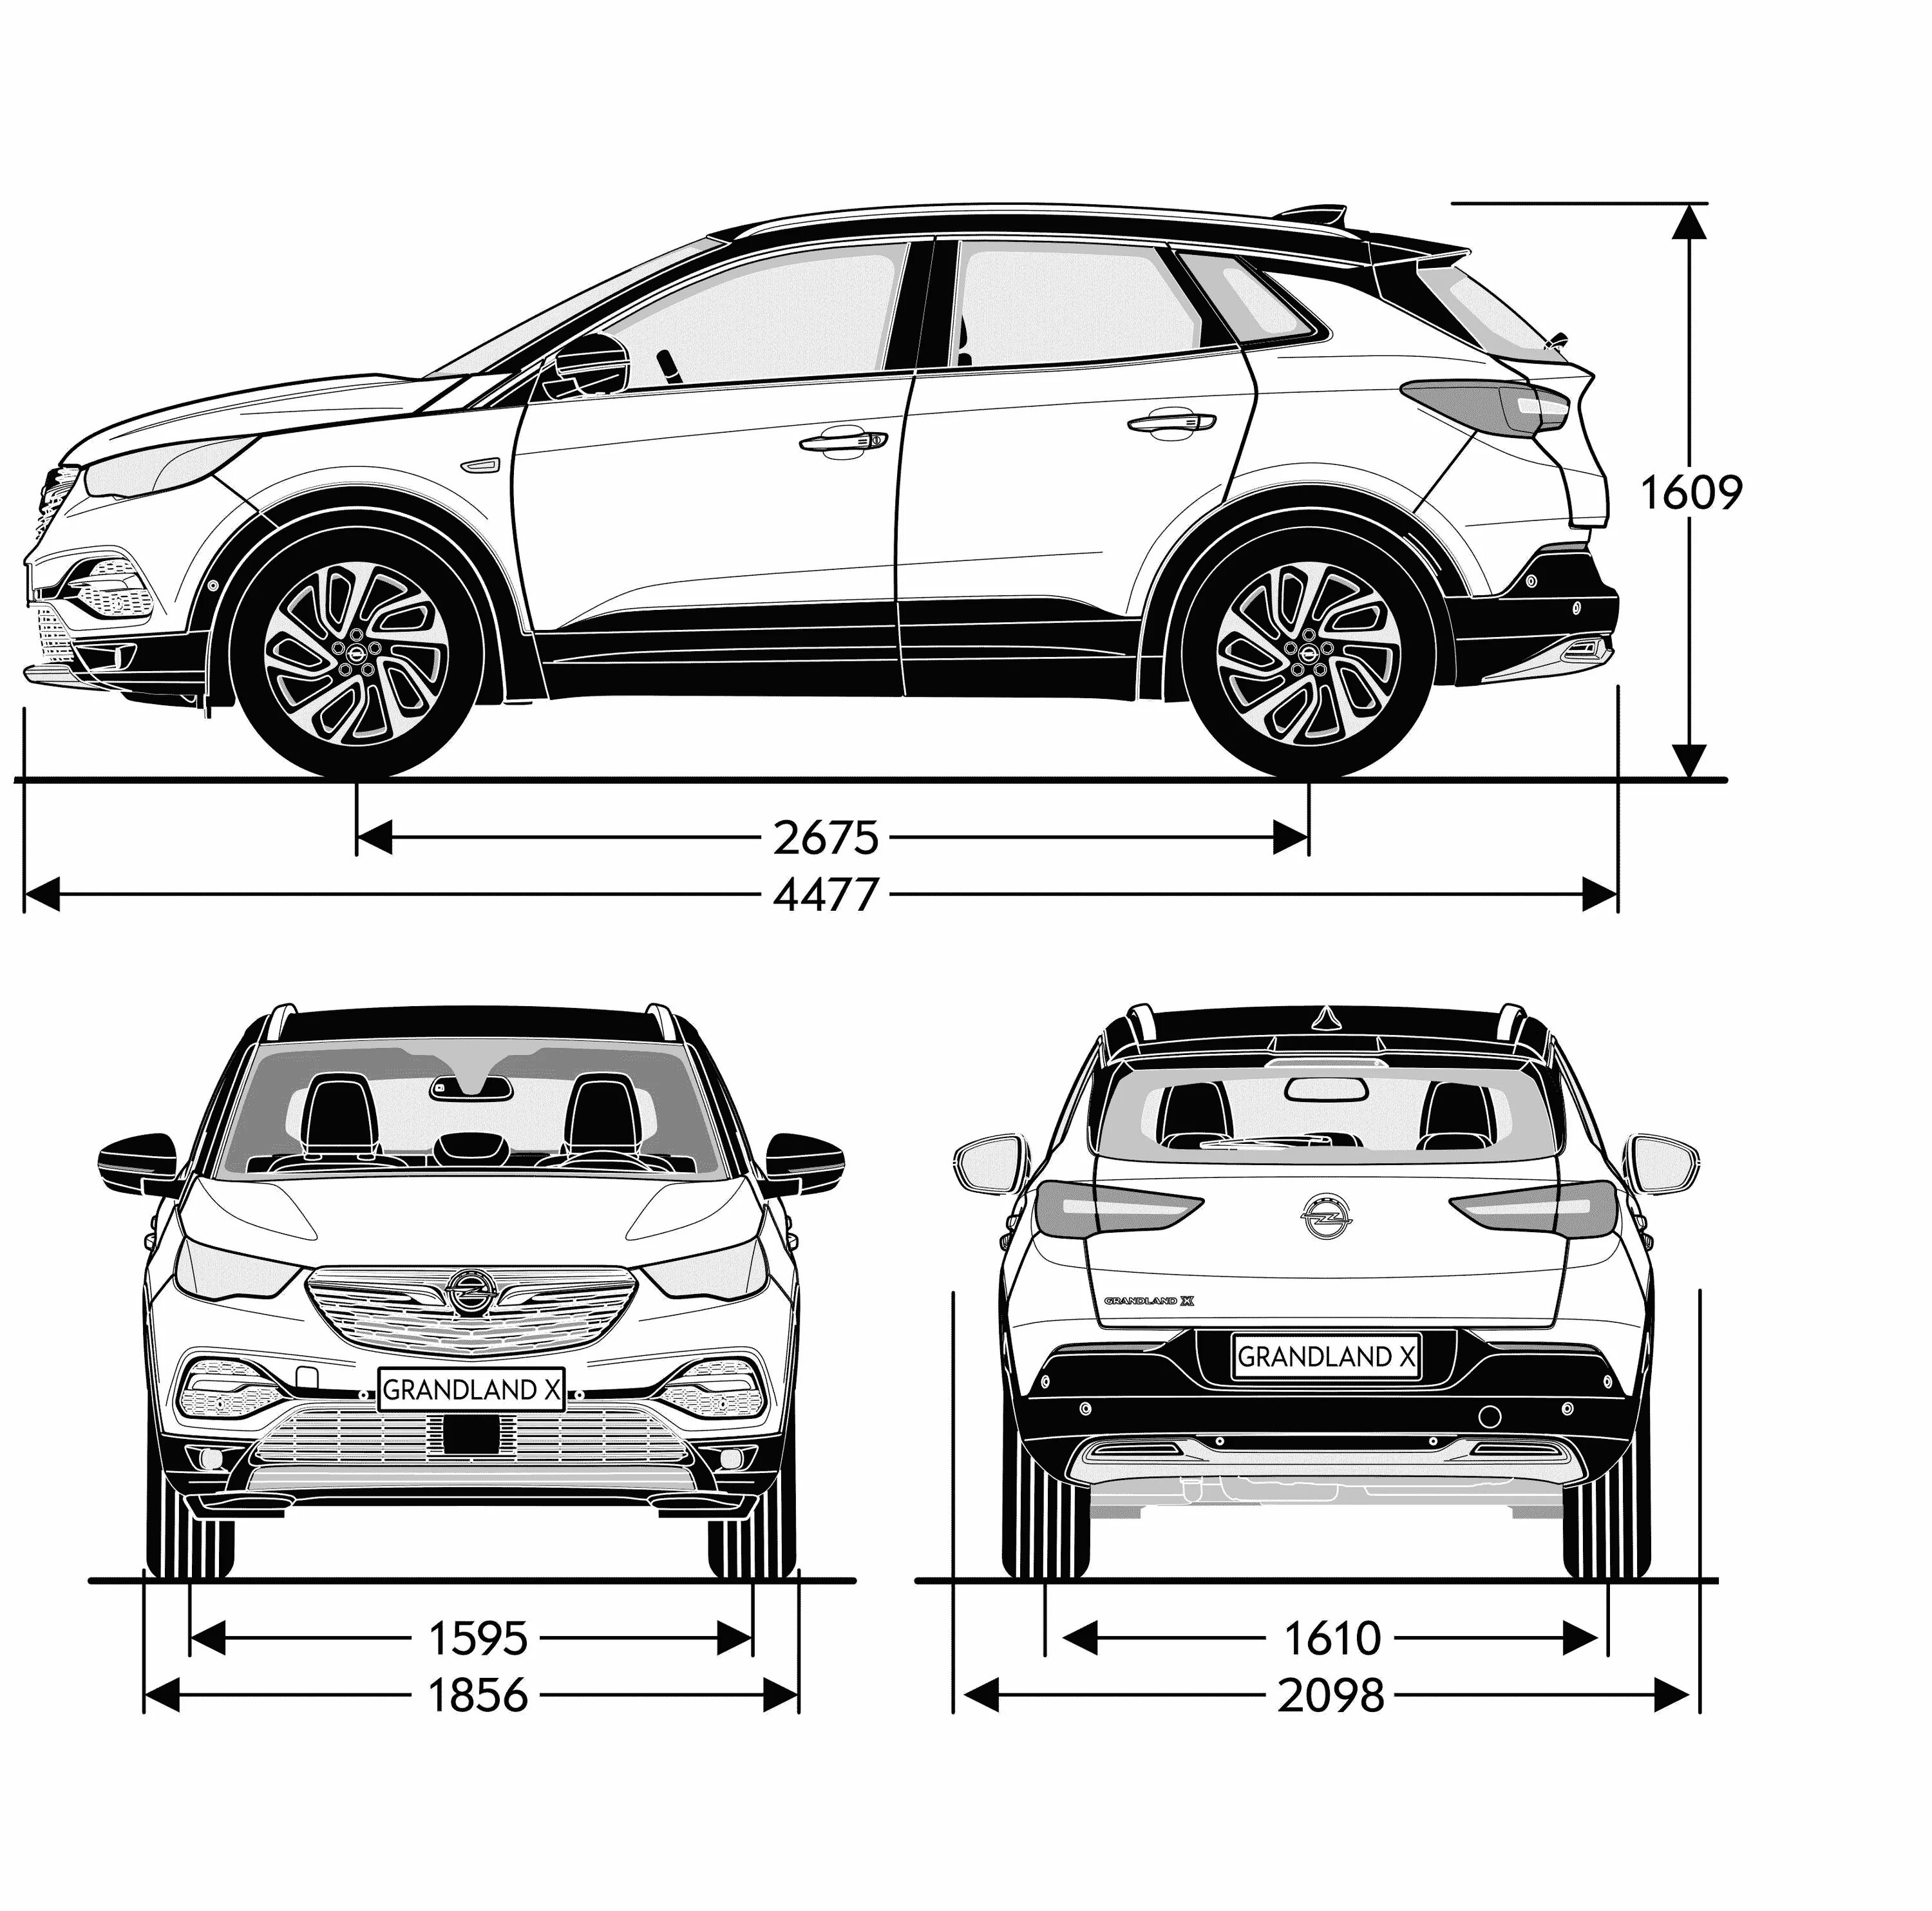 Тойота рав 4 чертеж. Hyundai Tucson 3 чертеж. Opel Mokka схемы чертежи. Opel Grandland x Размеры. Габариты кроссовера